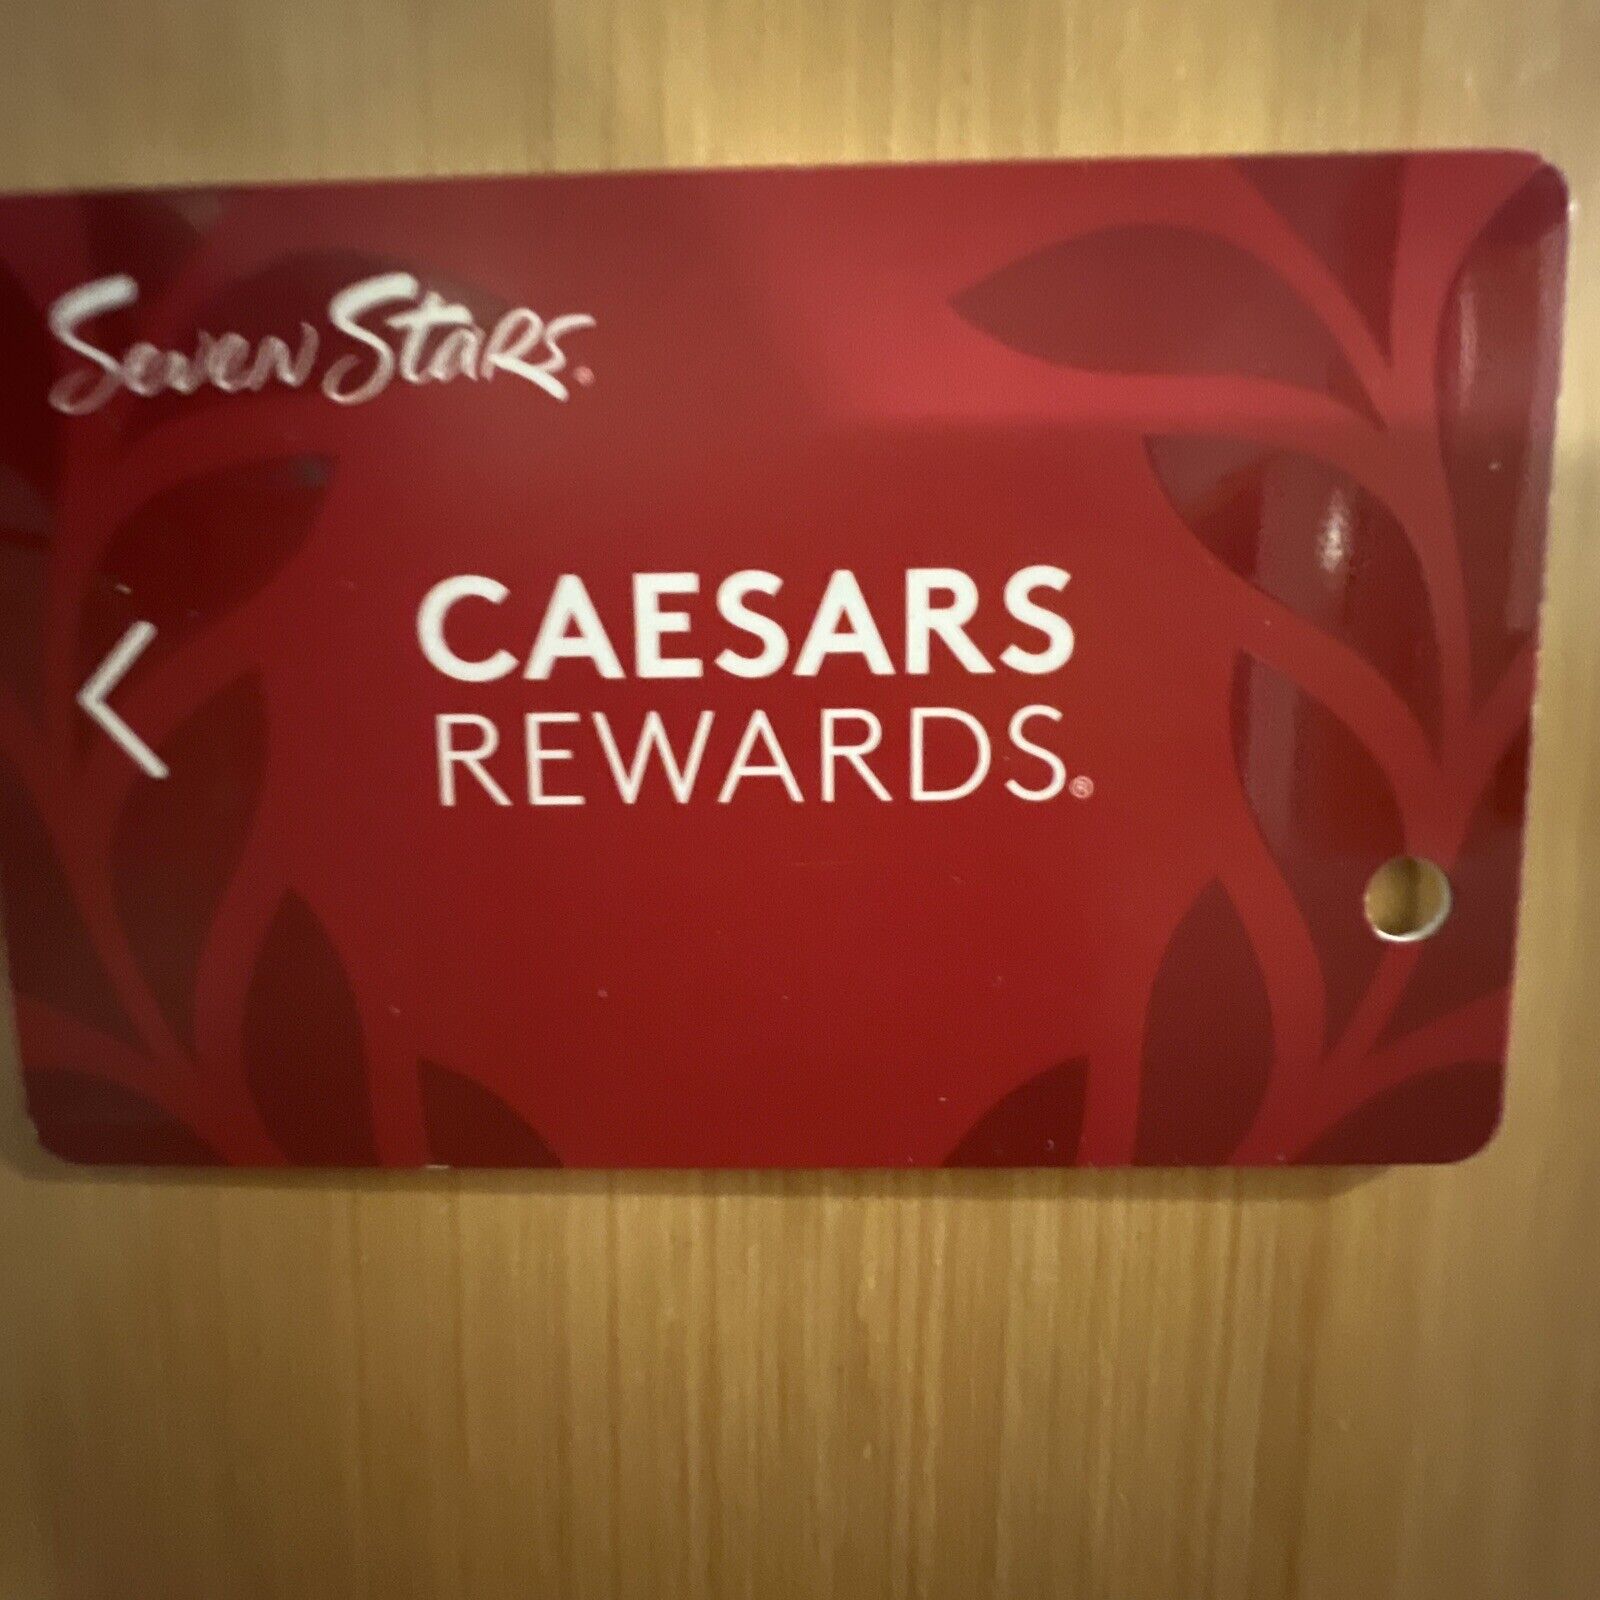 CAESARS CAESAR'S TOTAL REWARDS SEVEN STARS PLAYERS SLOT CLUB CARD BLANK NO NAME